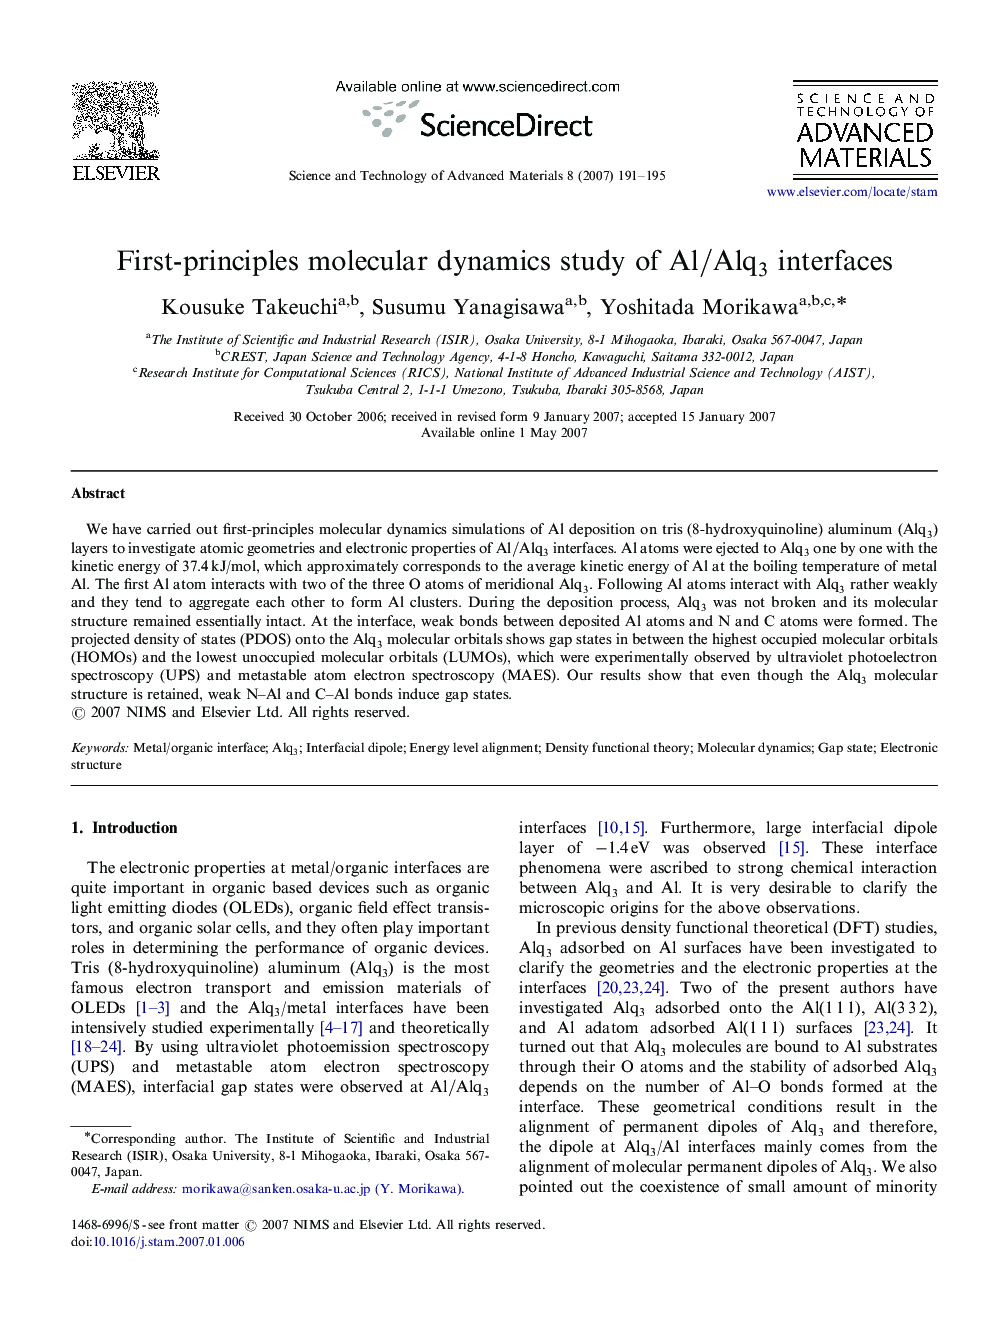 First-principles molecular dynamics study of Al/Alq3 interfaces